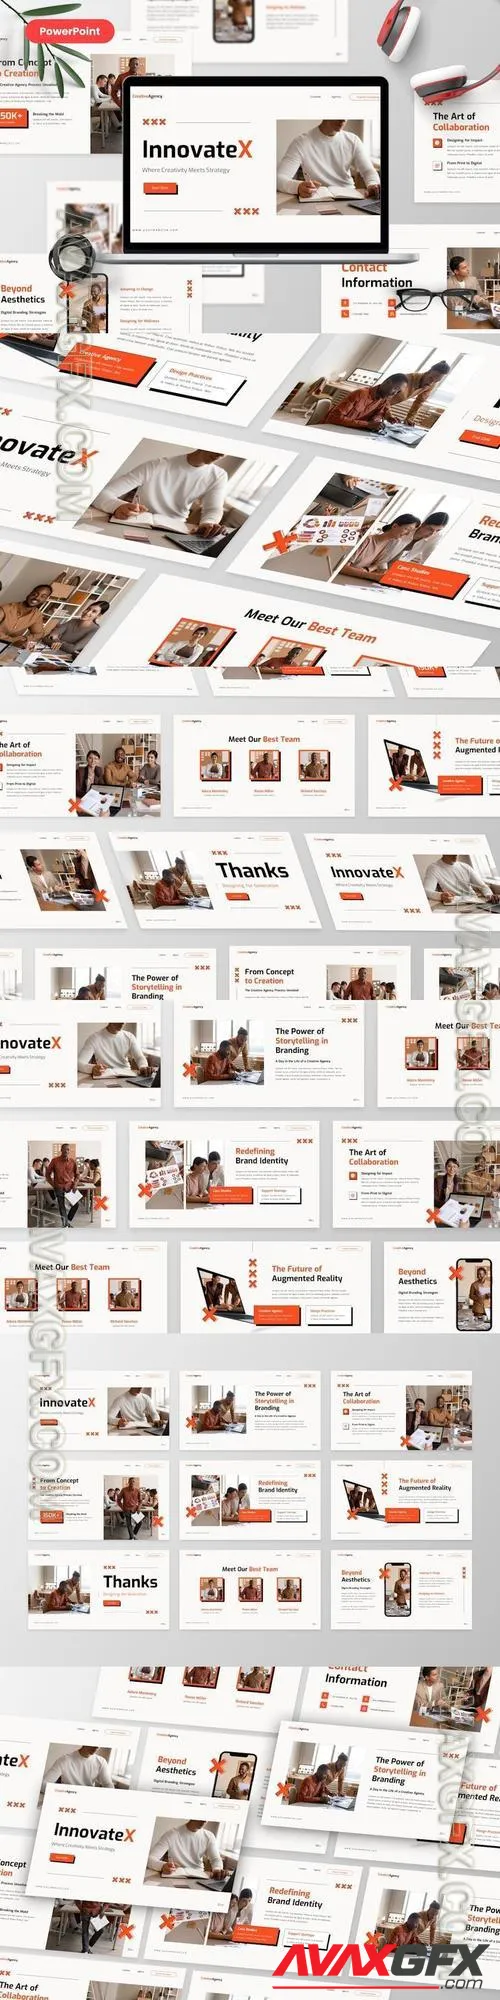 InnovateX - Creative Agency PowerPoint Template